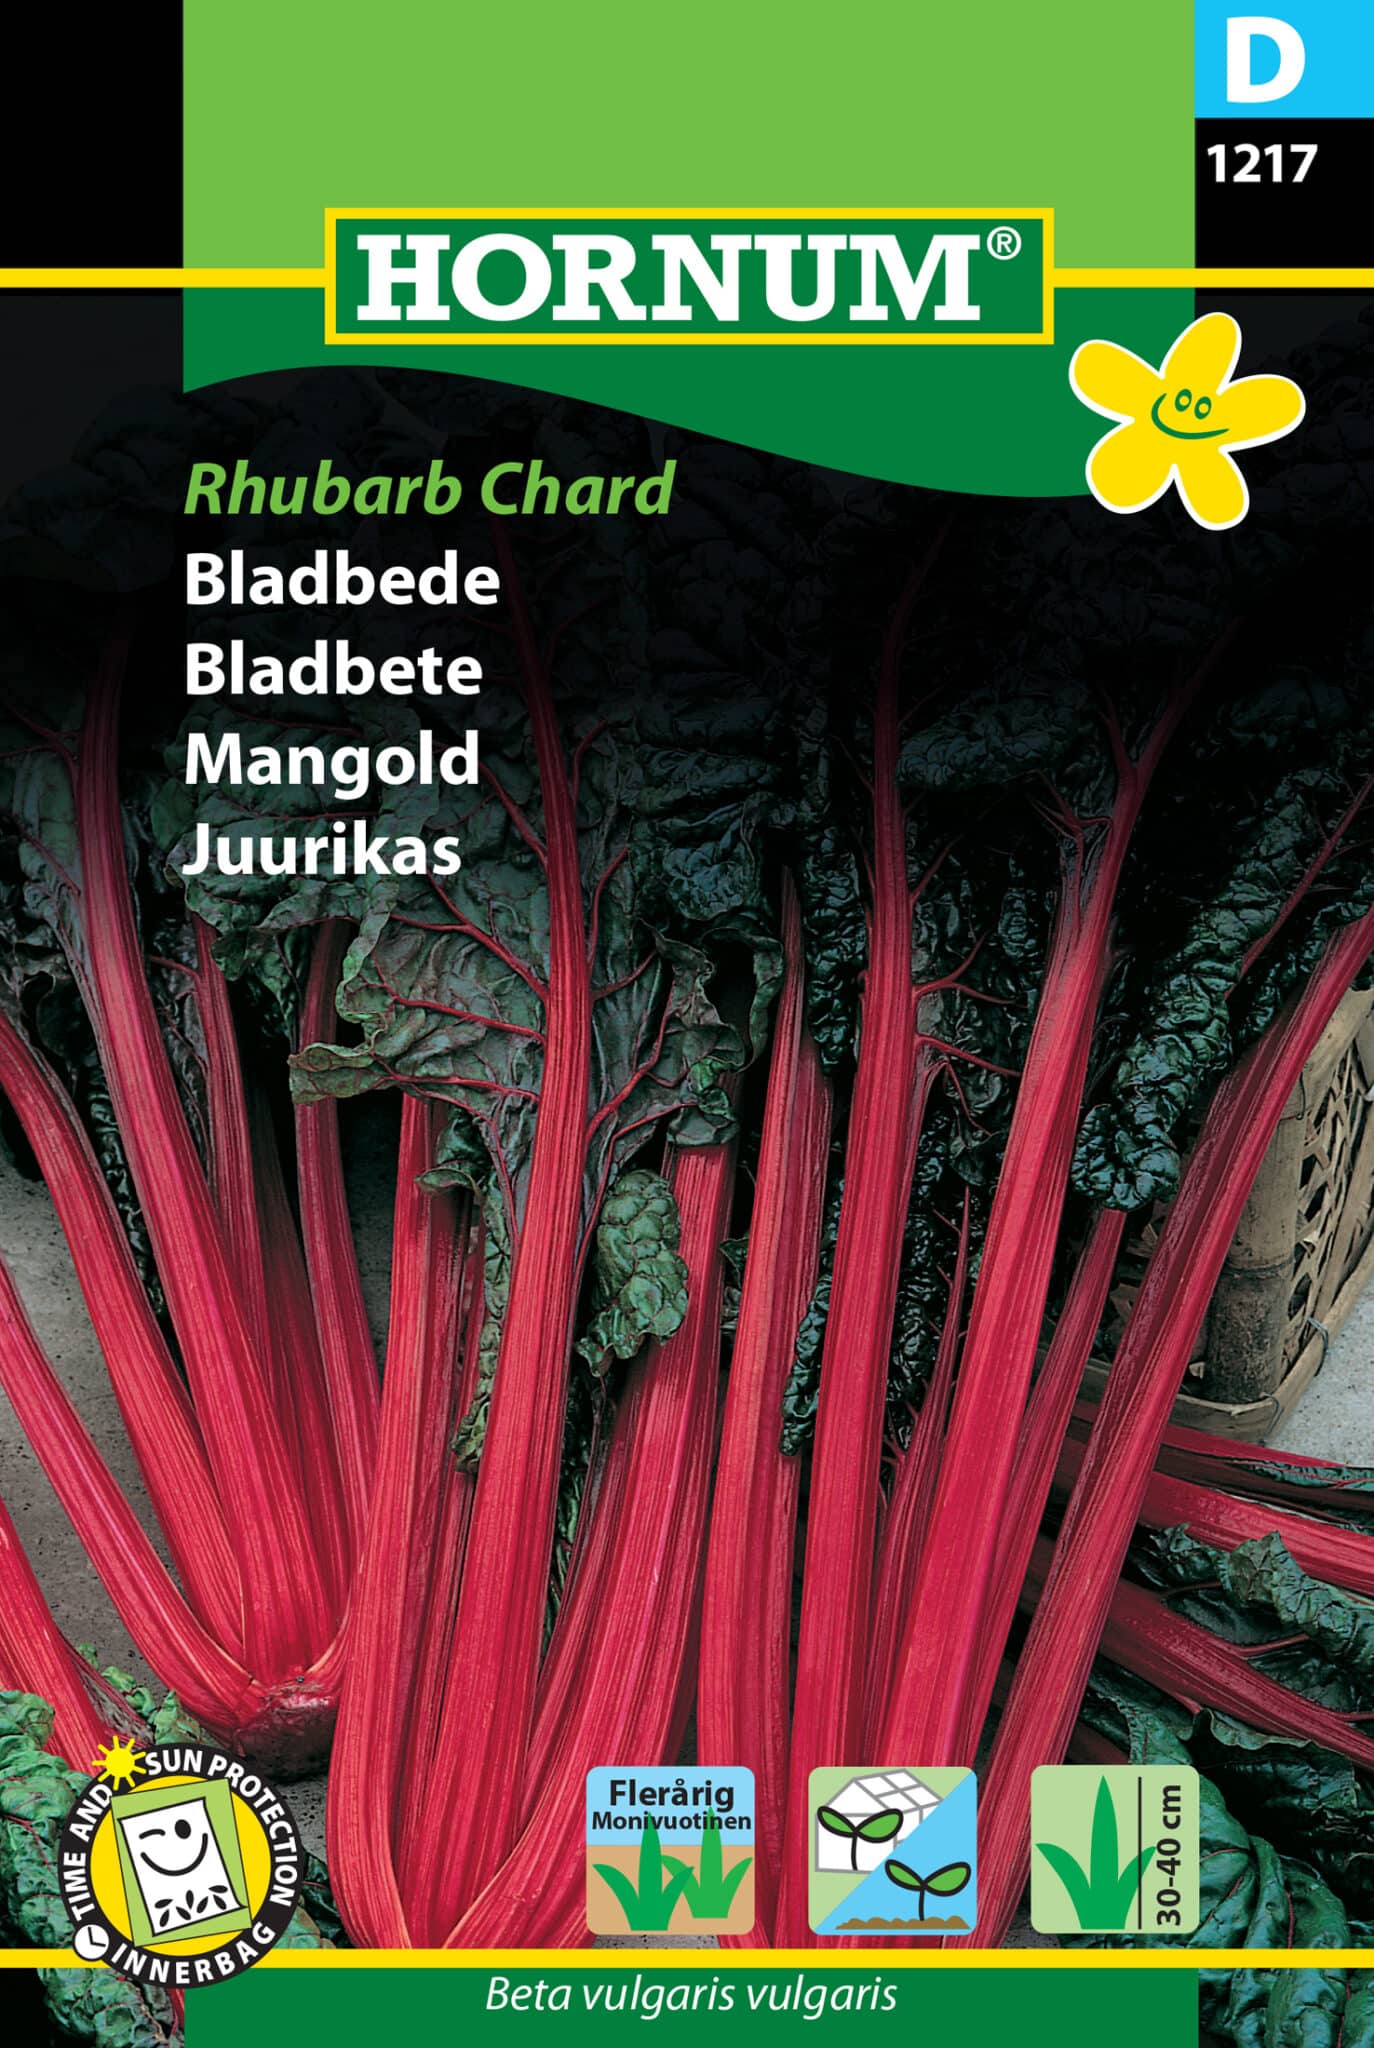 Bladbede 'Rhubarb Chard' Frø Løgbutikken